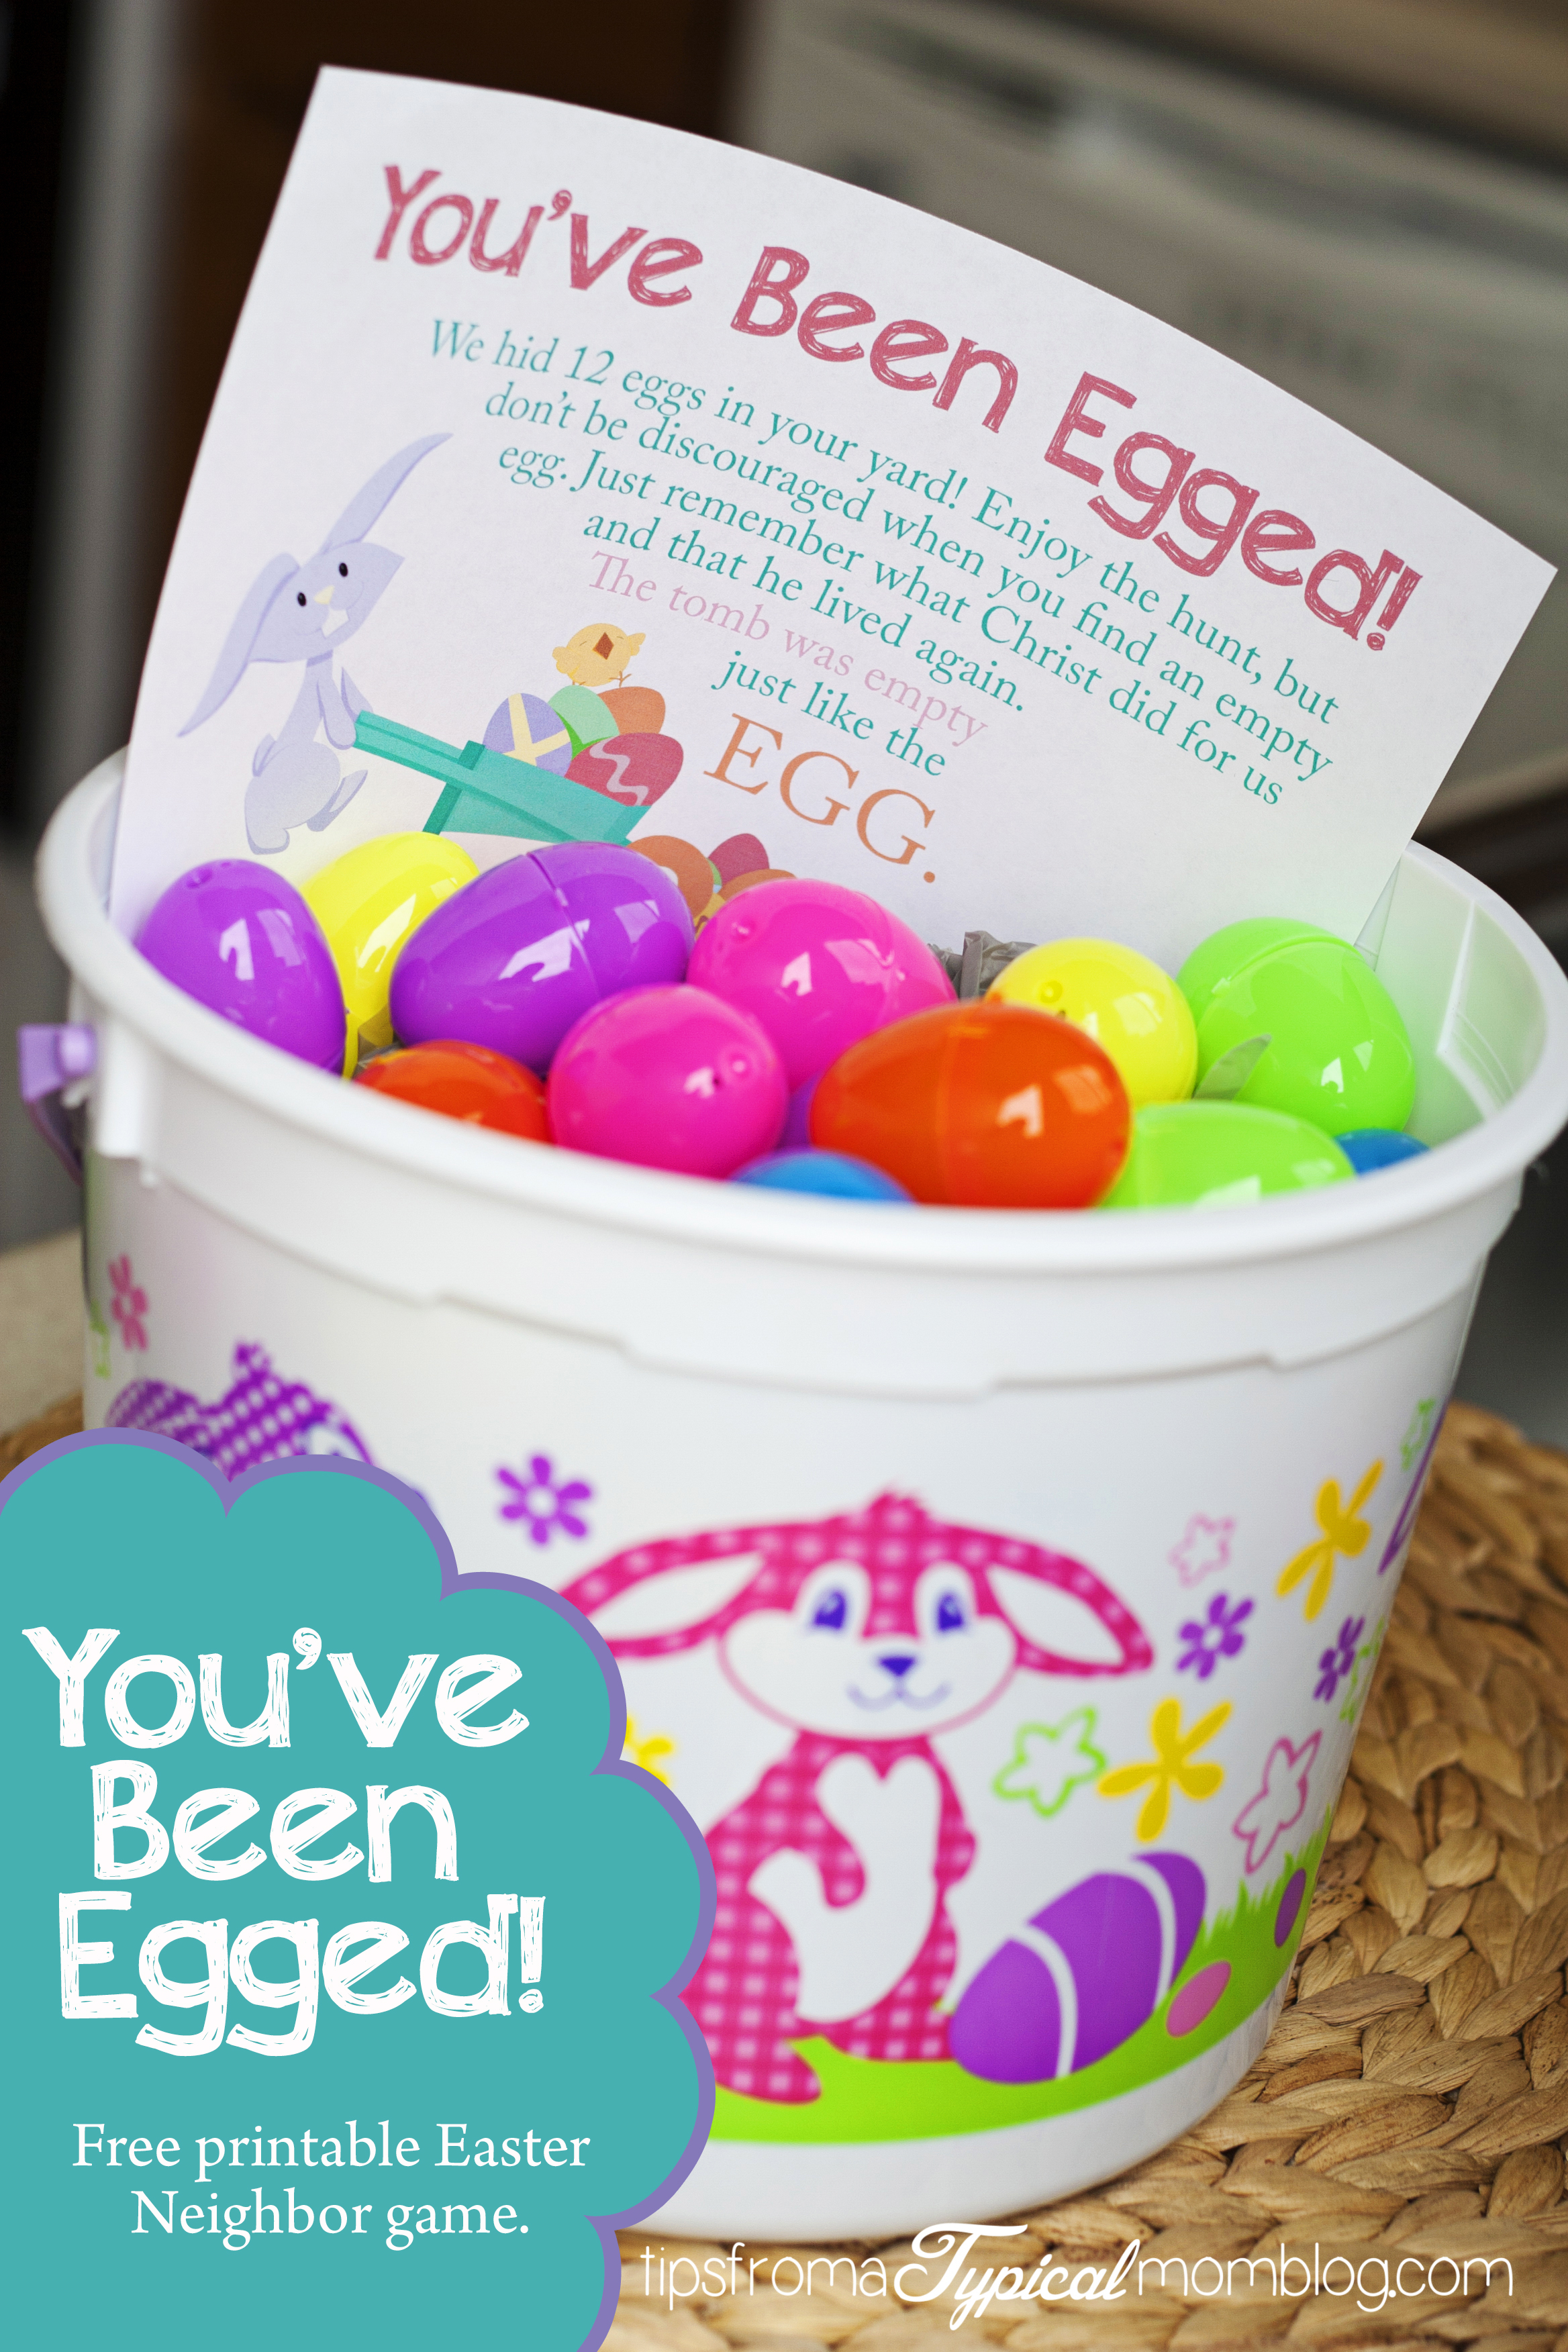 You've Been Egged Free Printable Neighbor Easter Game